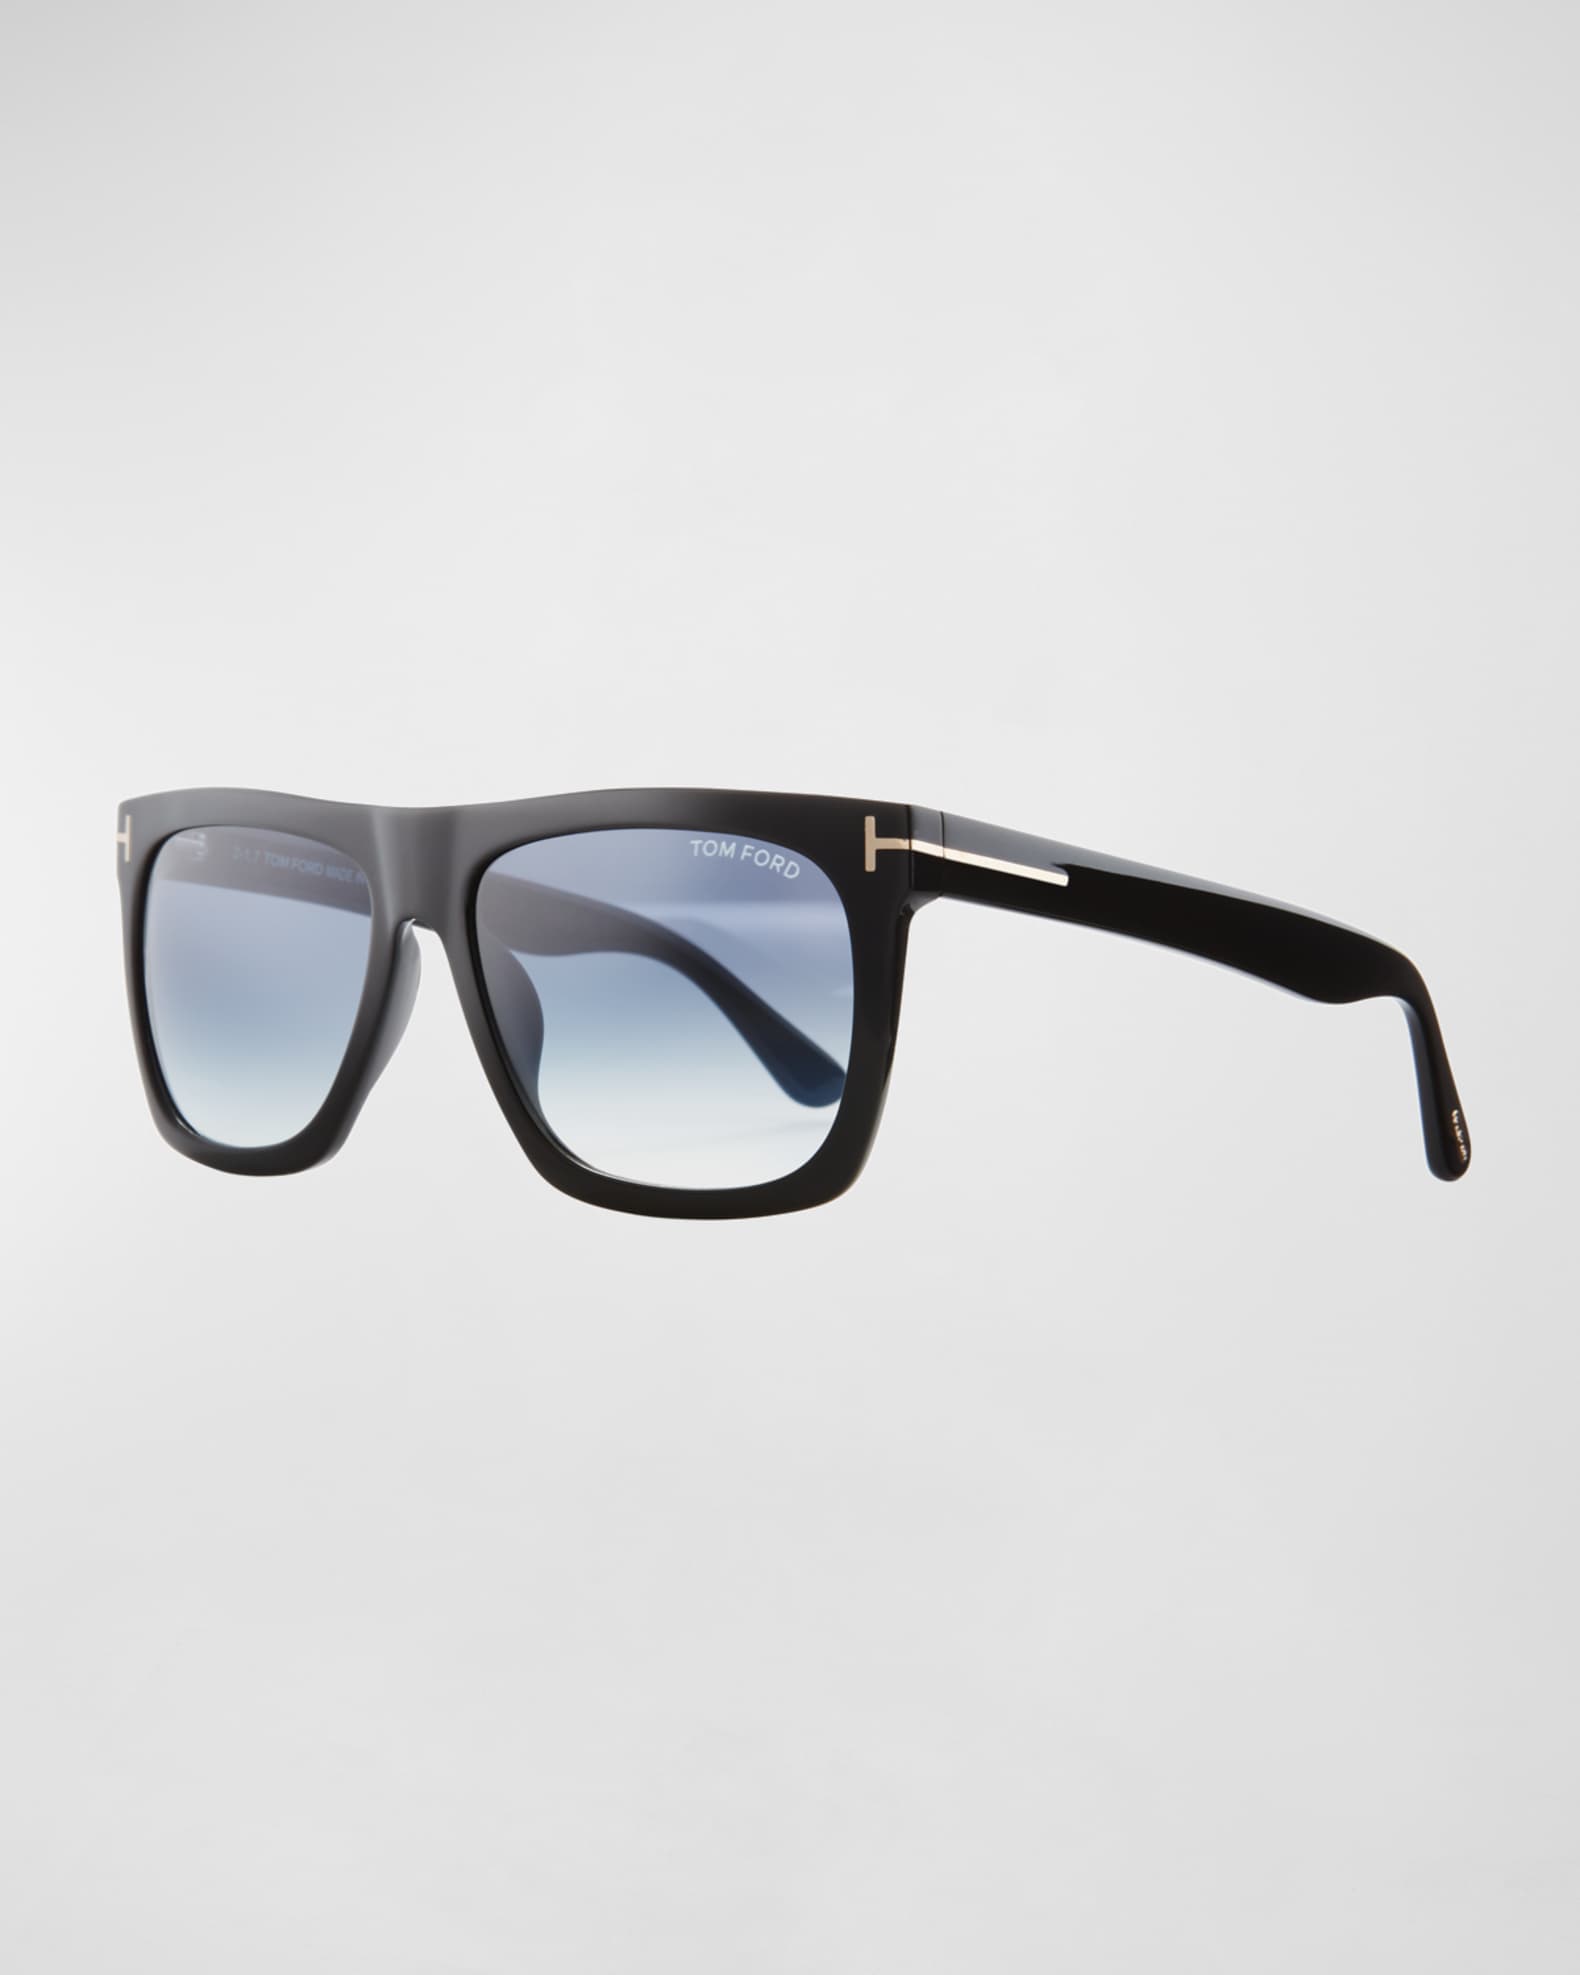 Black Fausto D-frame acetate sunglasses, Tom Ford